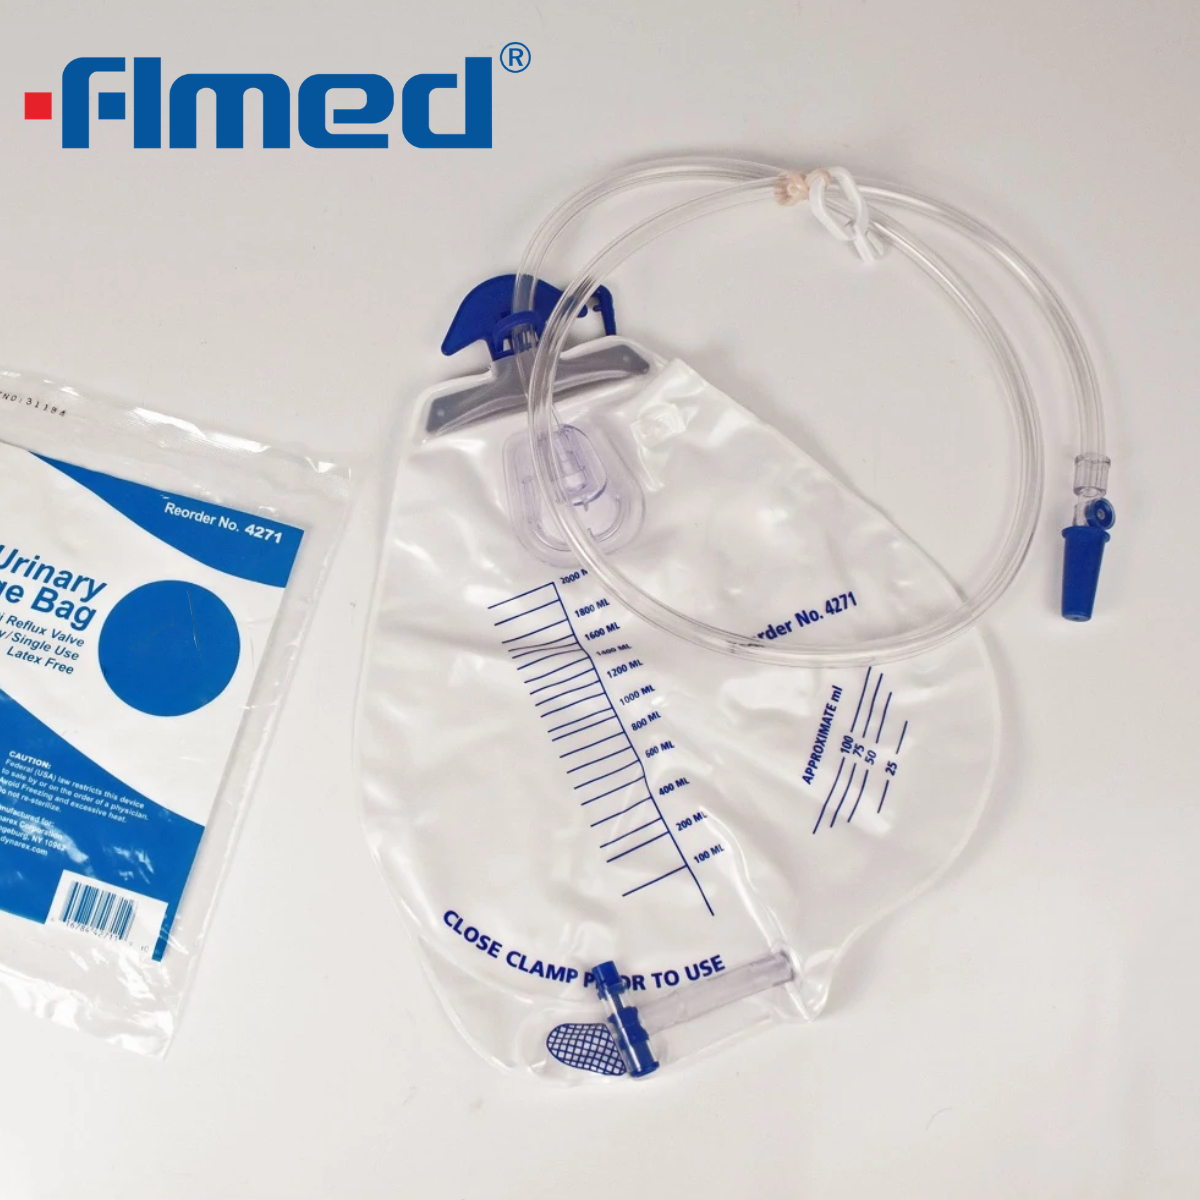 Sac de drainage urinaire médical avec dispositif anti-reflux 2000 ml